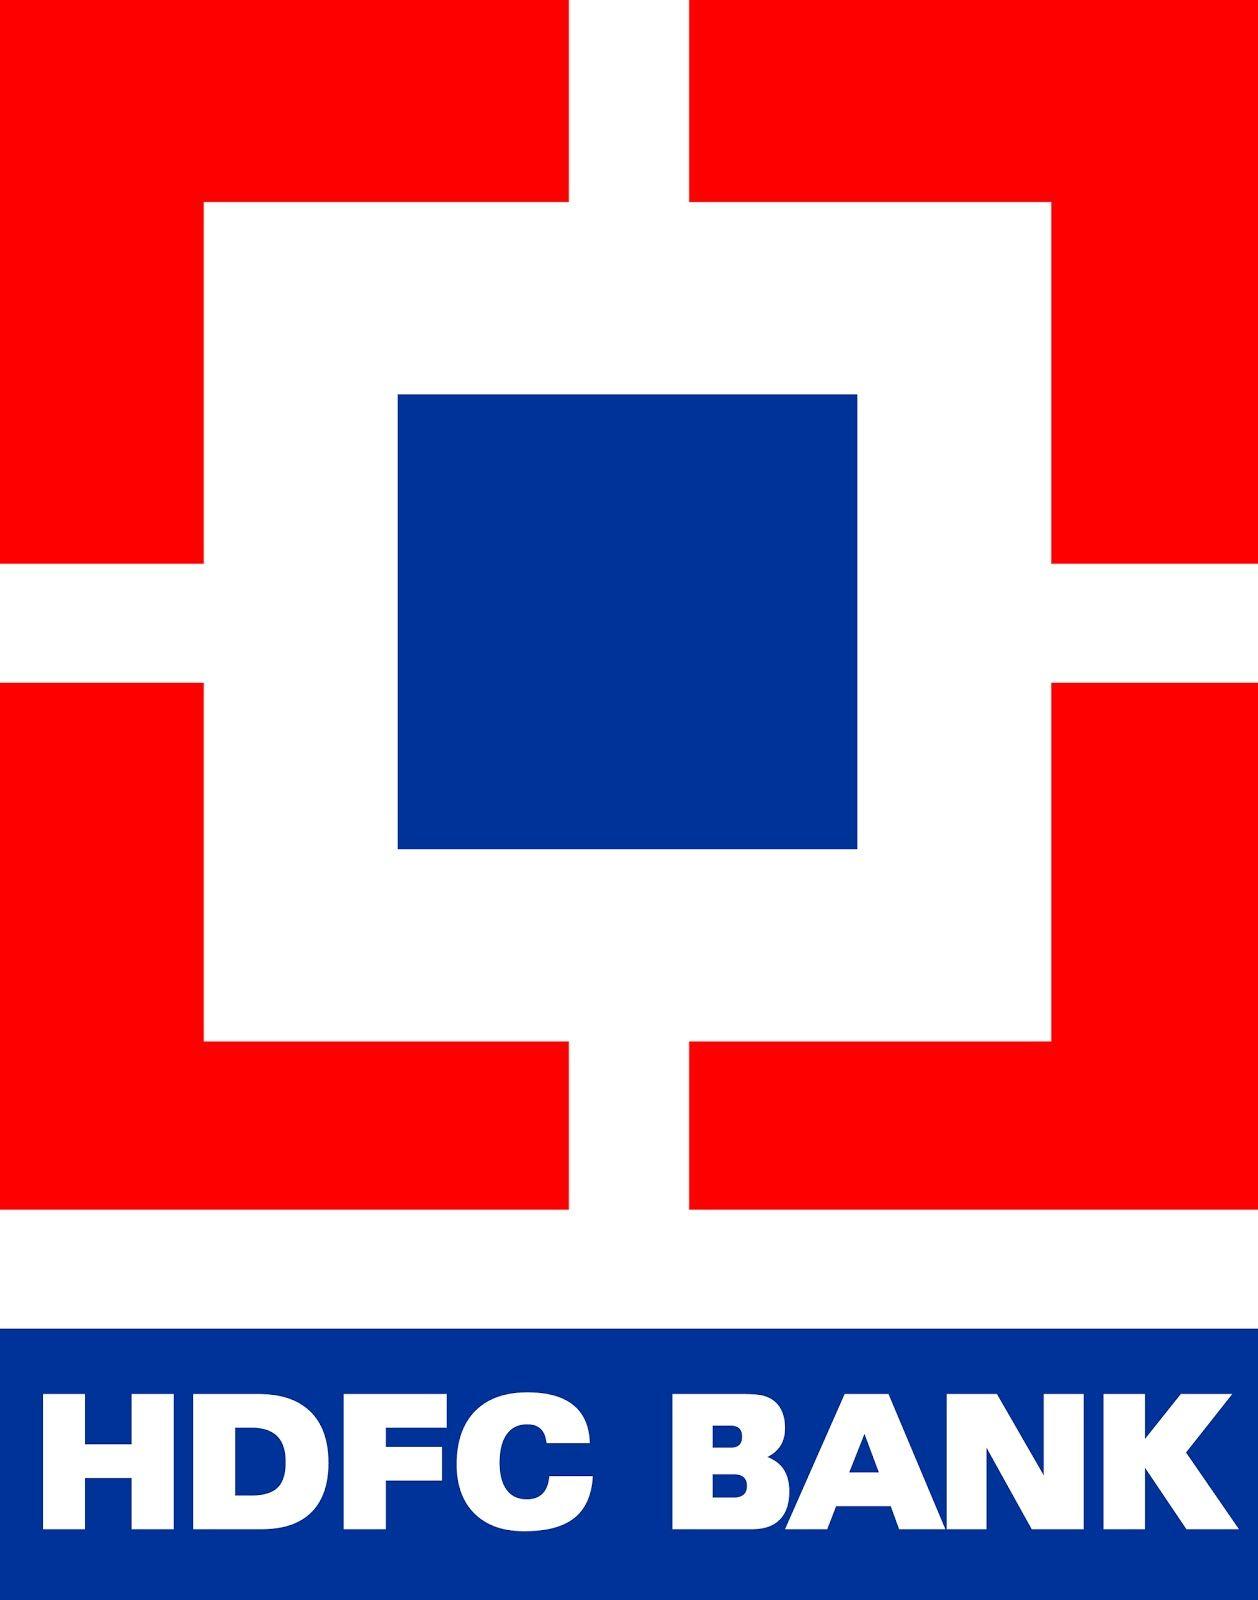 HDFC Logo - HDFC Bank Logo and Tagline -